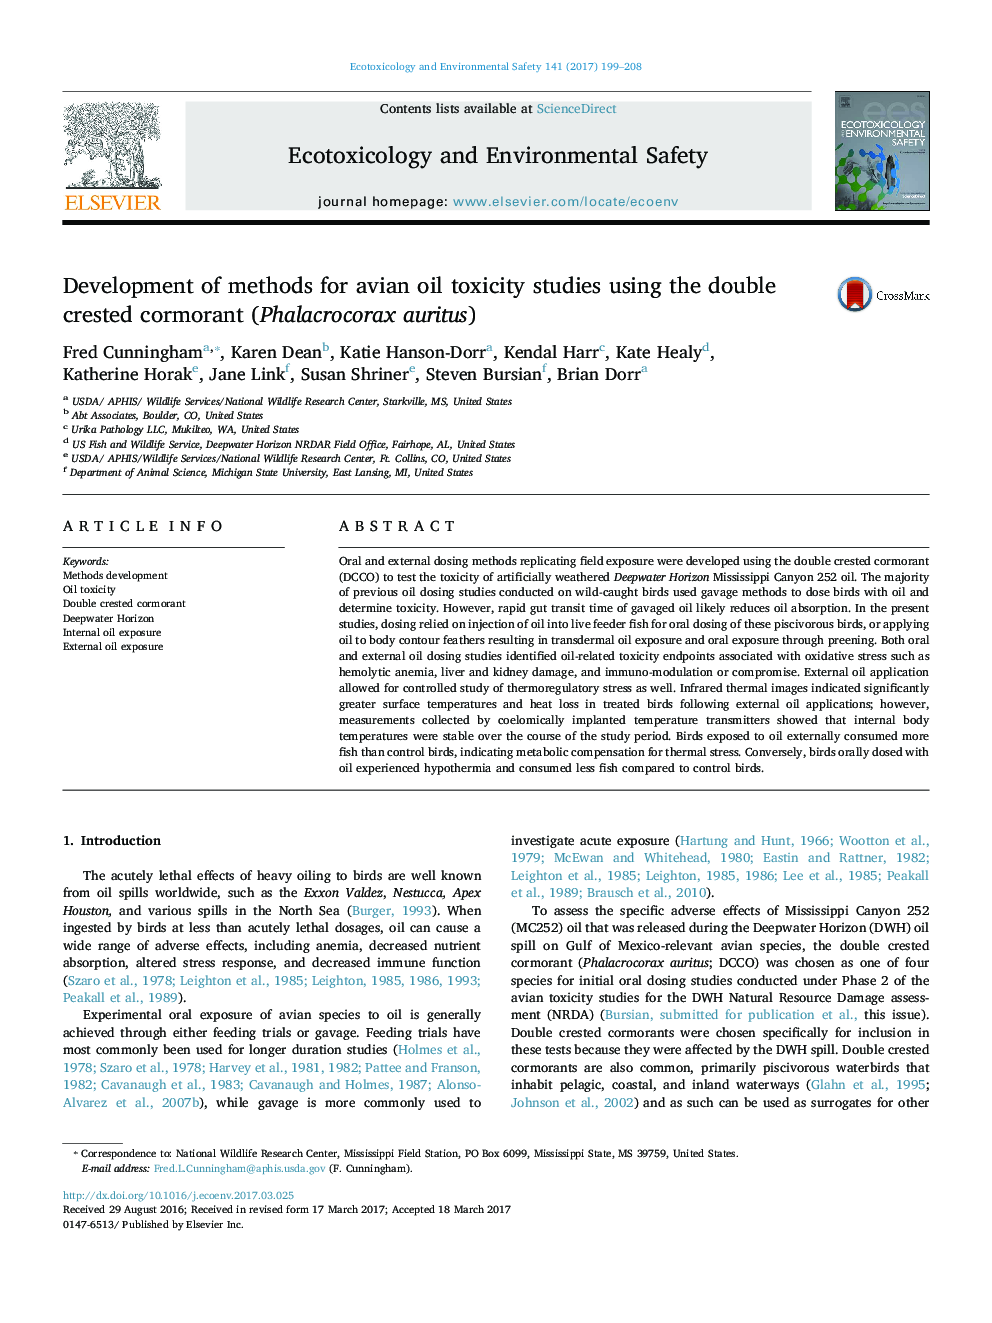 Development of methods for avian oil toxicity studies using the double crested cormorant (Phalacrocorax auritus)